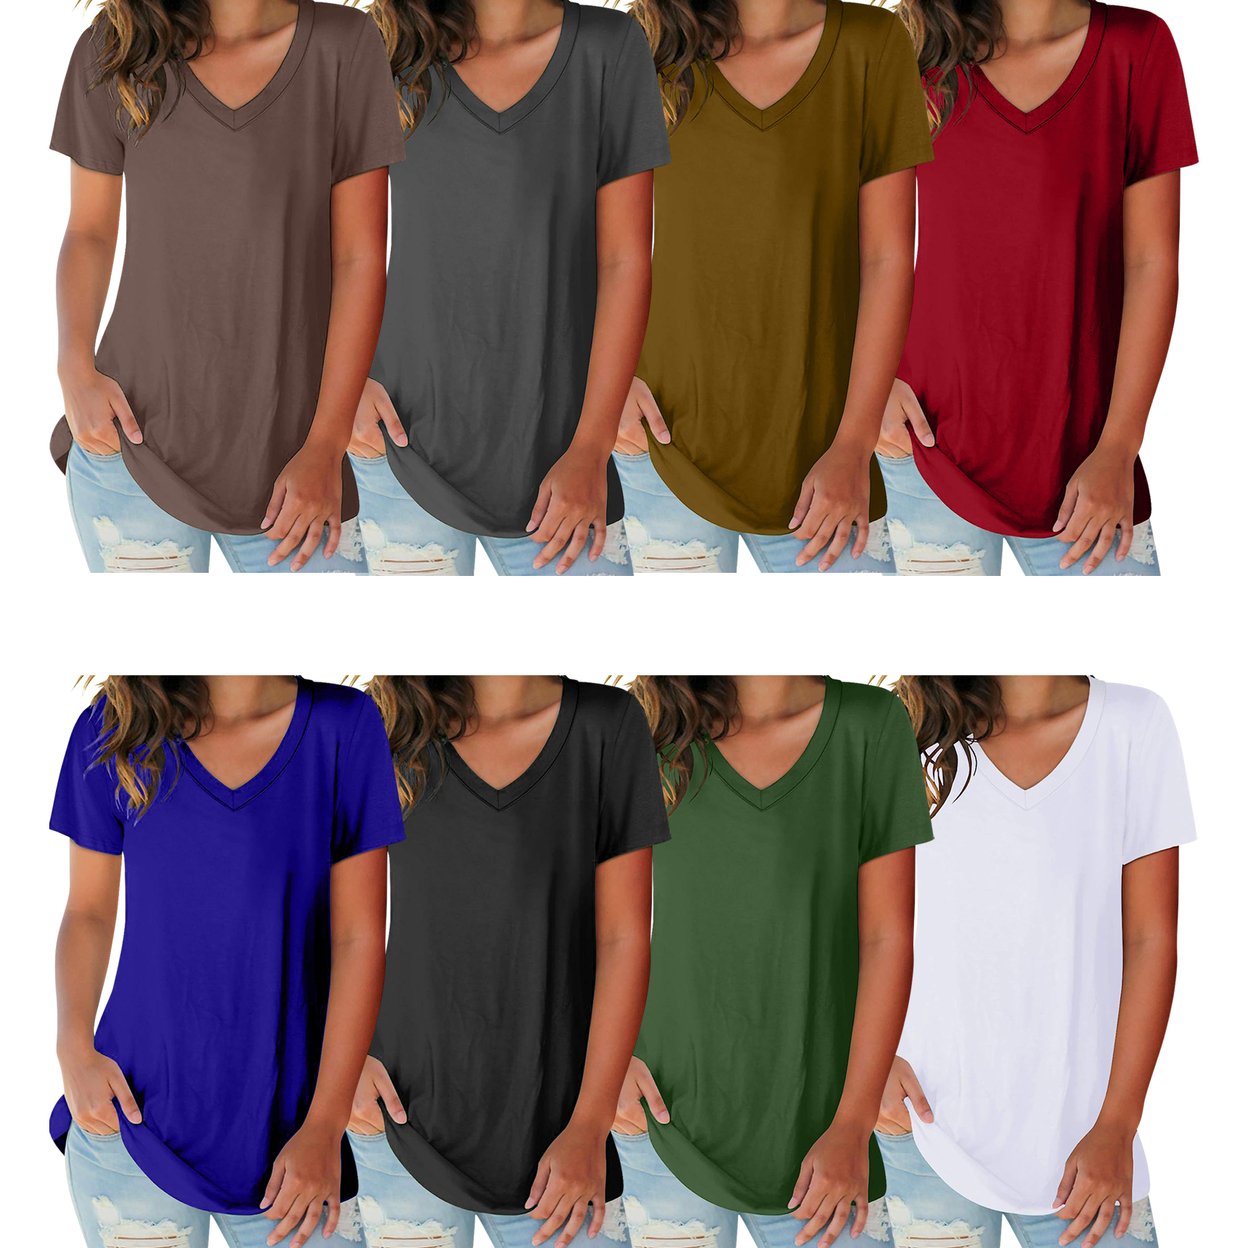 3-Pack: Women's Ultra Soft Smooth Cotton Blend Basic V-Neck Short Sleeve Shirts - Black, Grey, Brown, Large